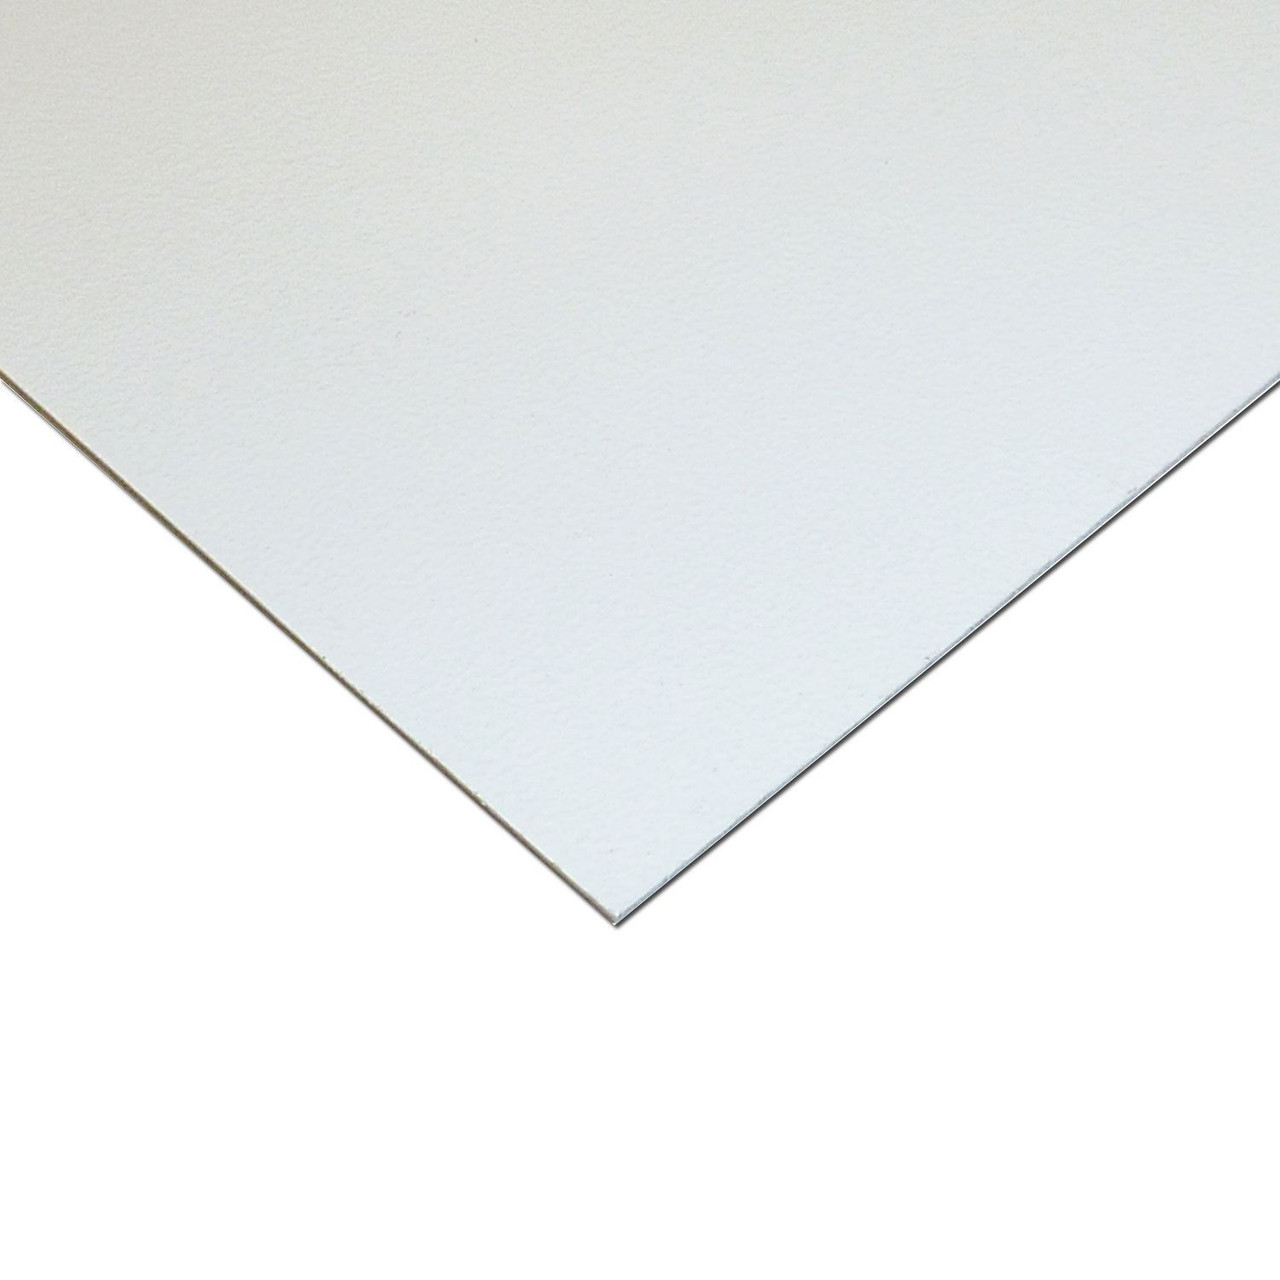 High Impact Polystyrene Plastic Sheet .040" x 38" x 80" - White